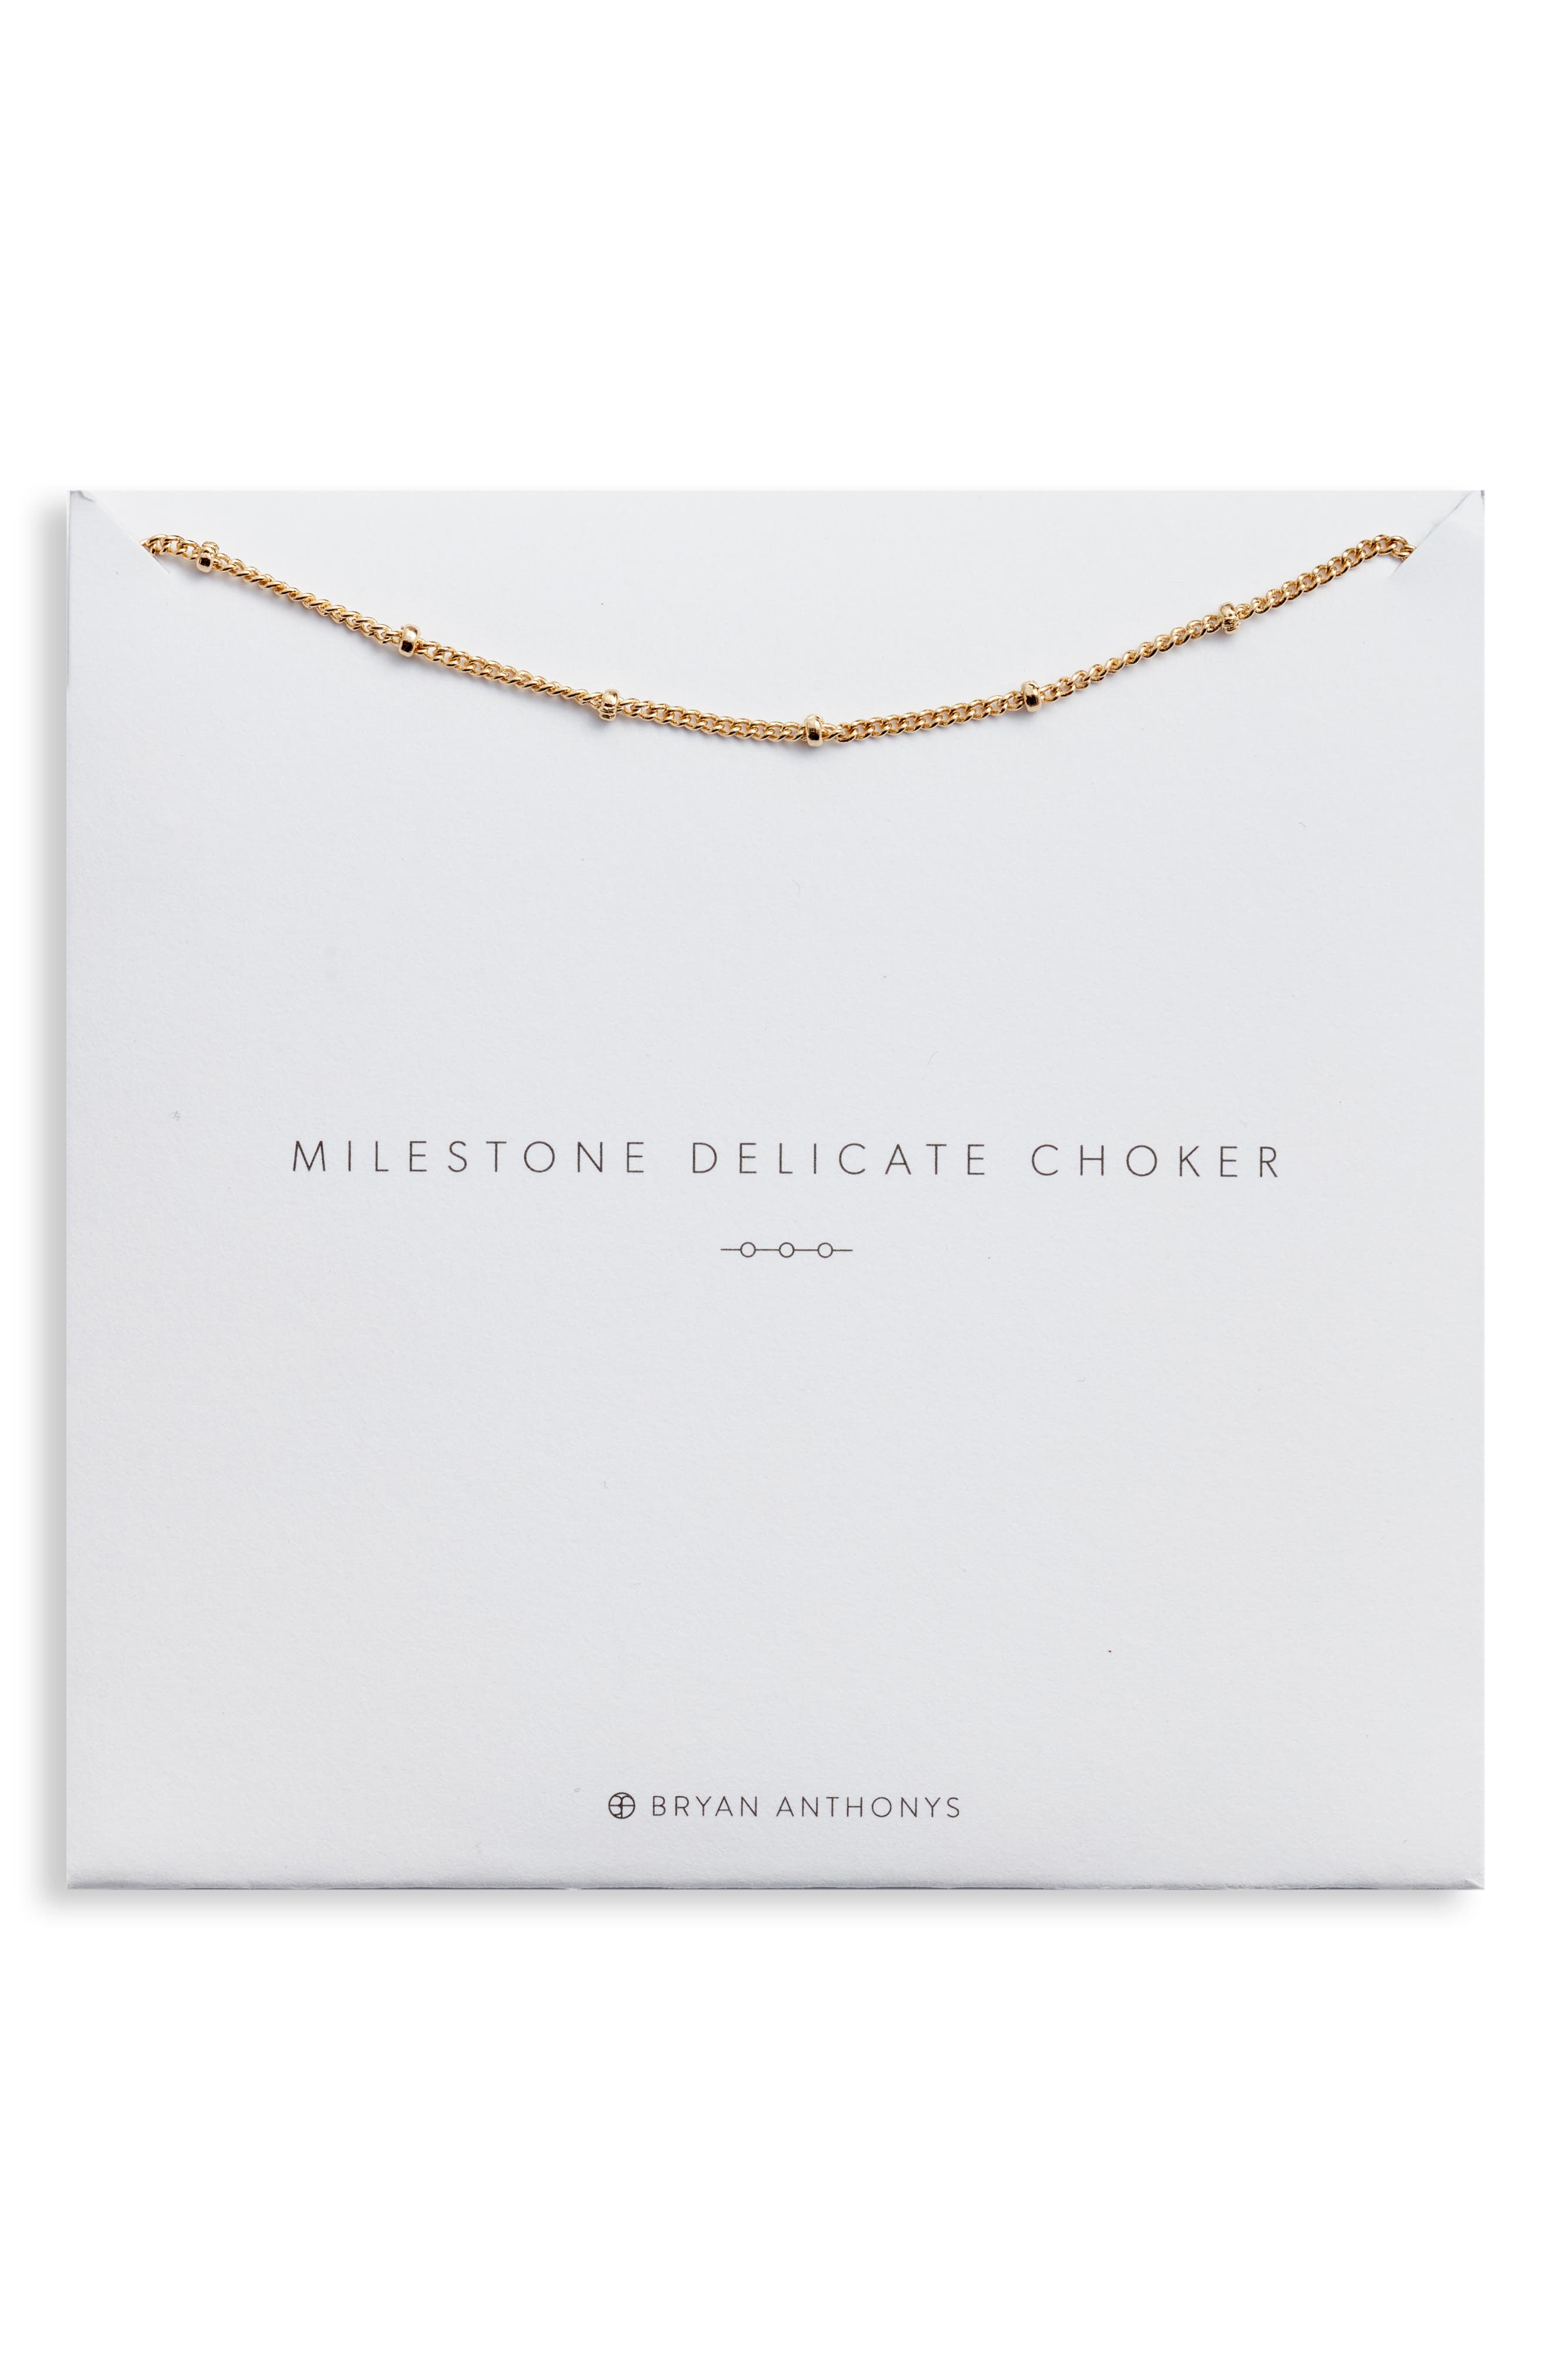 Bryan Anthonys Milestone Choker Necklace in Gold